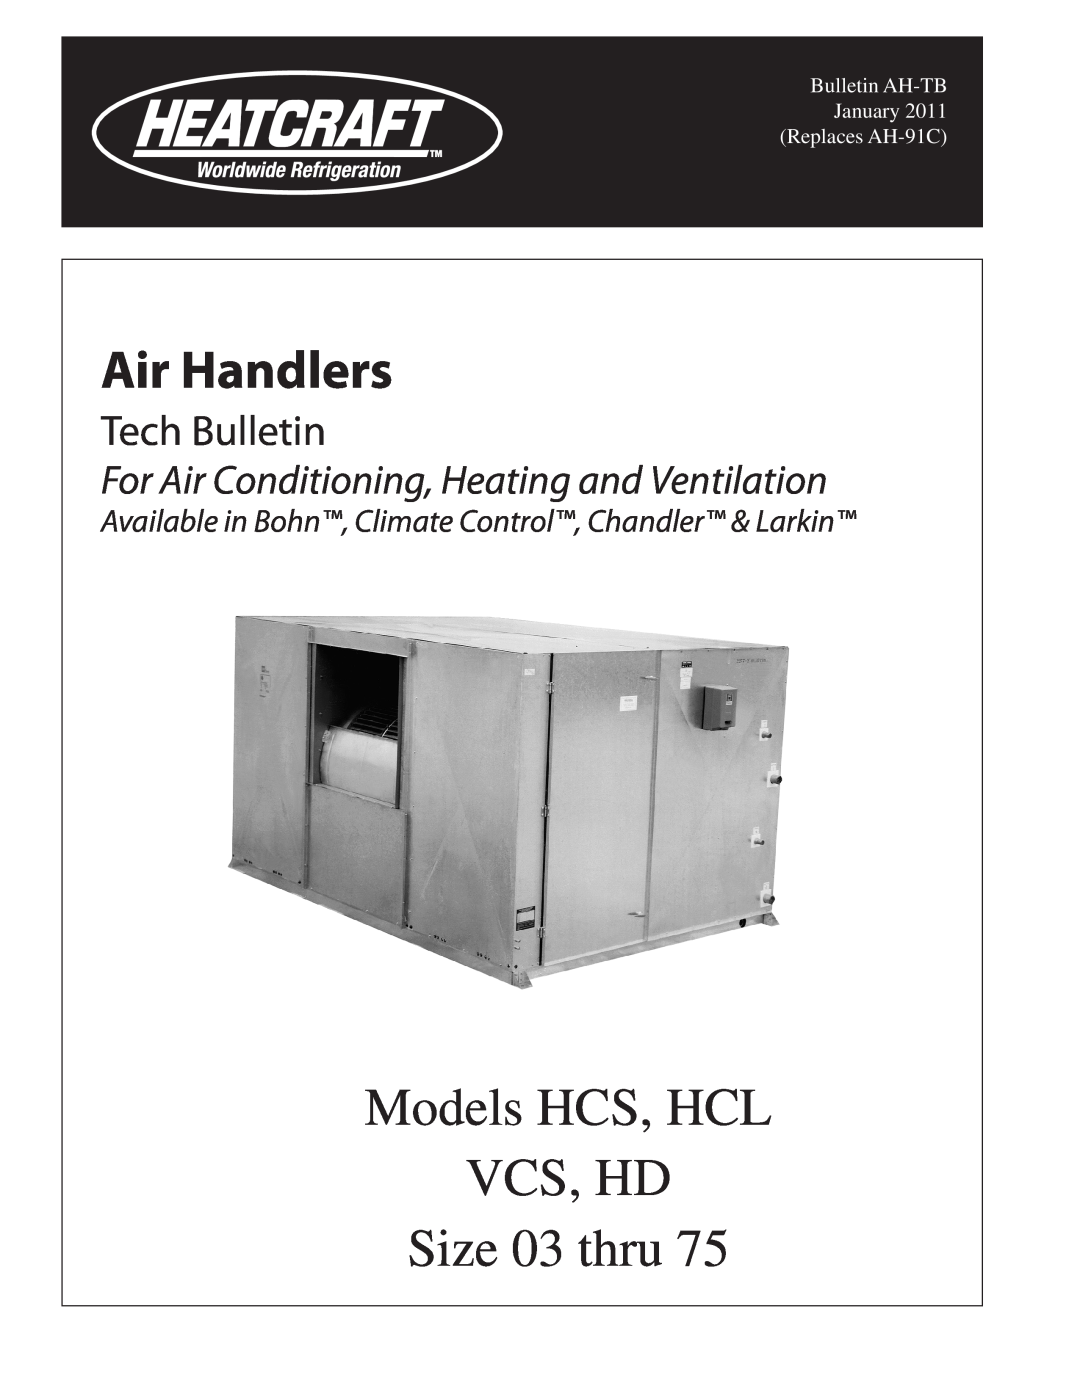 Heatcraft Refrigeration Products manual Air Handlers, Models HCS, HCL VCS, HD Size 03 thru, Tech Bulletin 